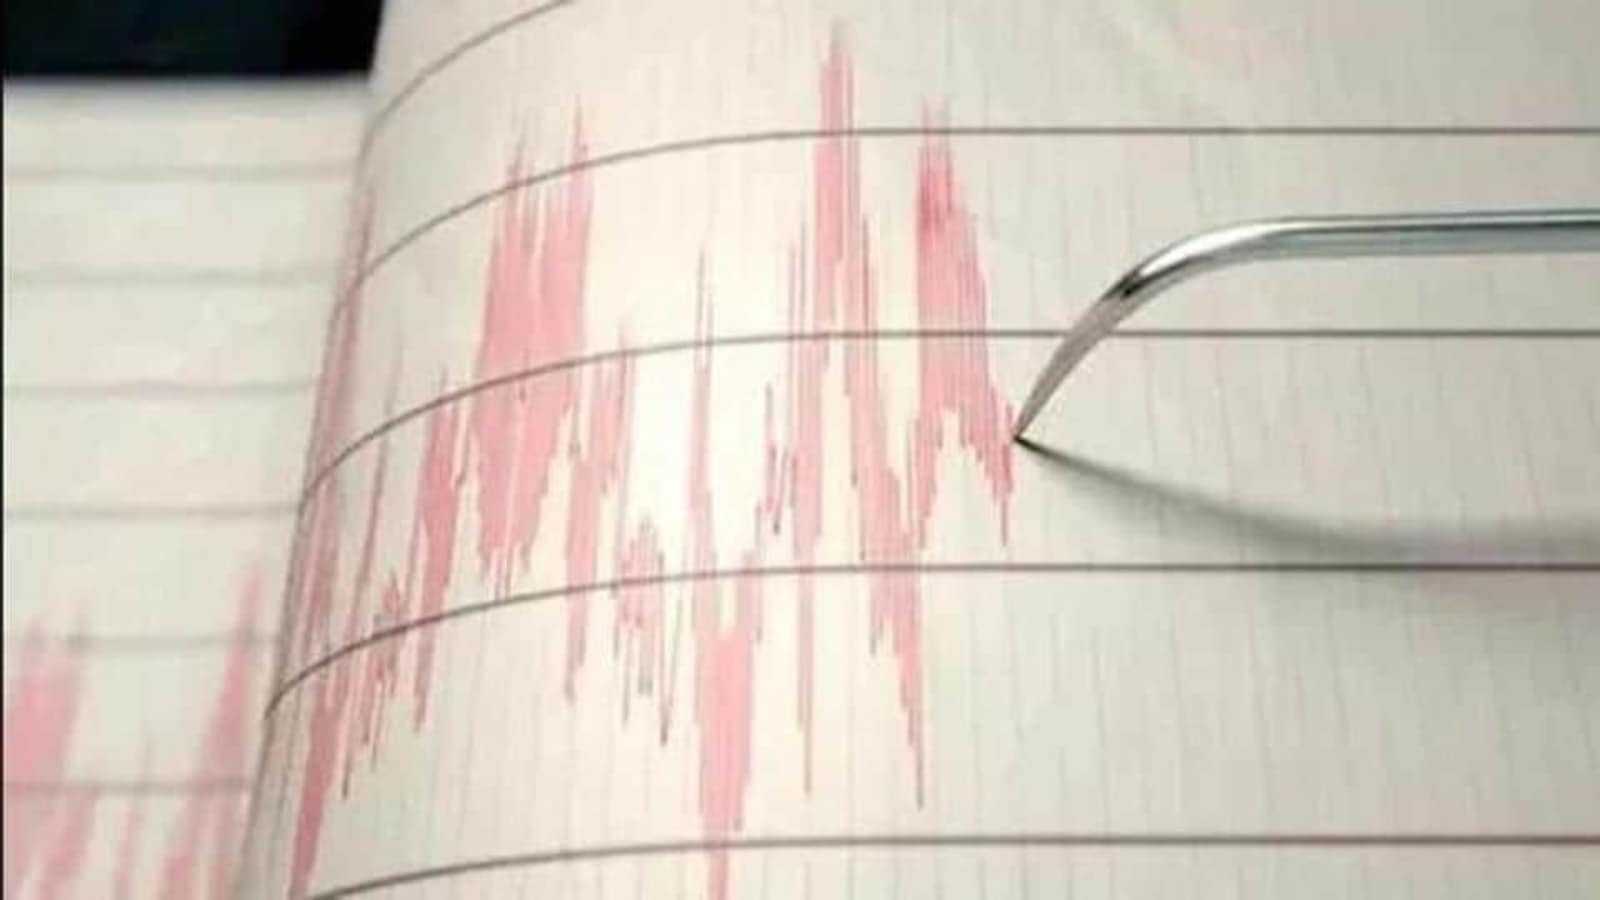 5.8 magnitude earthquake strikes China's Aral